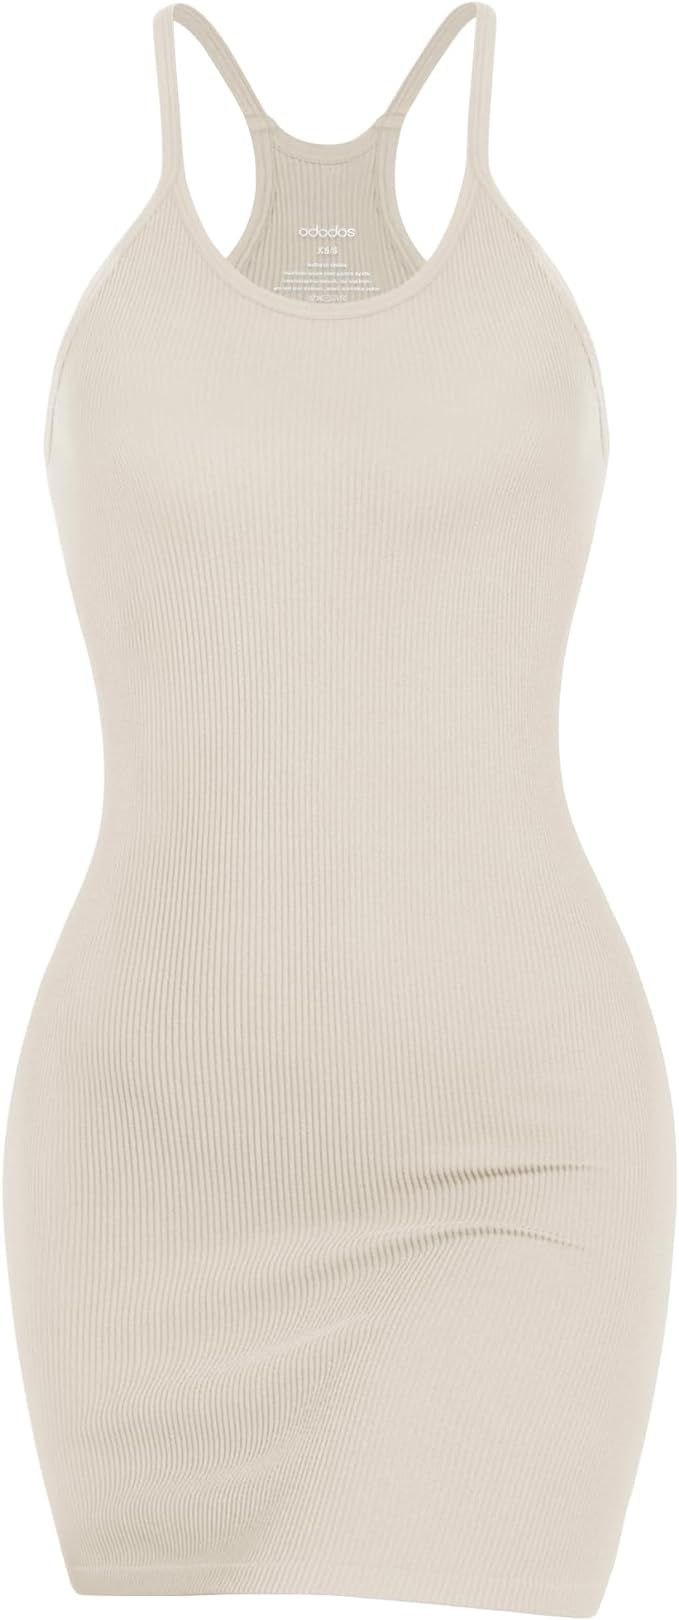 ODODOS 2-Pack Seamless Cami Under Dress for Women, Ribbed Sleeveless Bodycon Tank Tops Mini Dress... | Amazon (US)